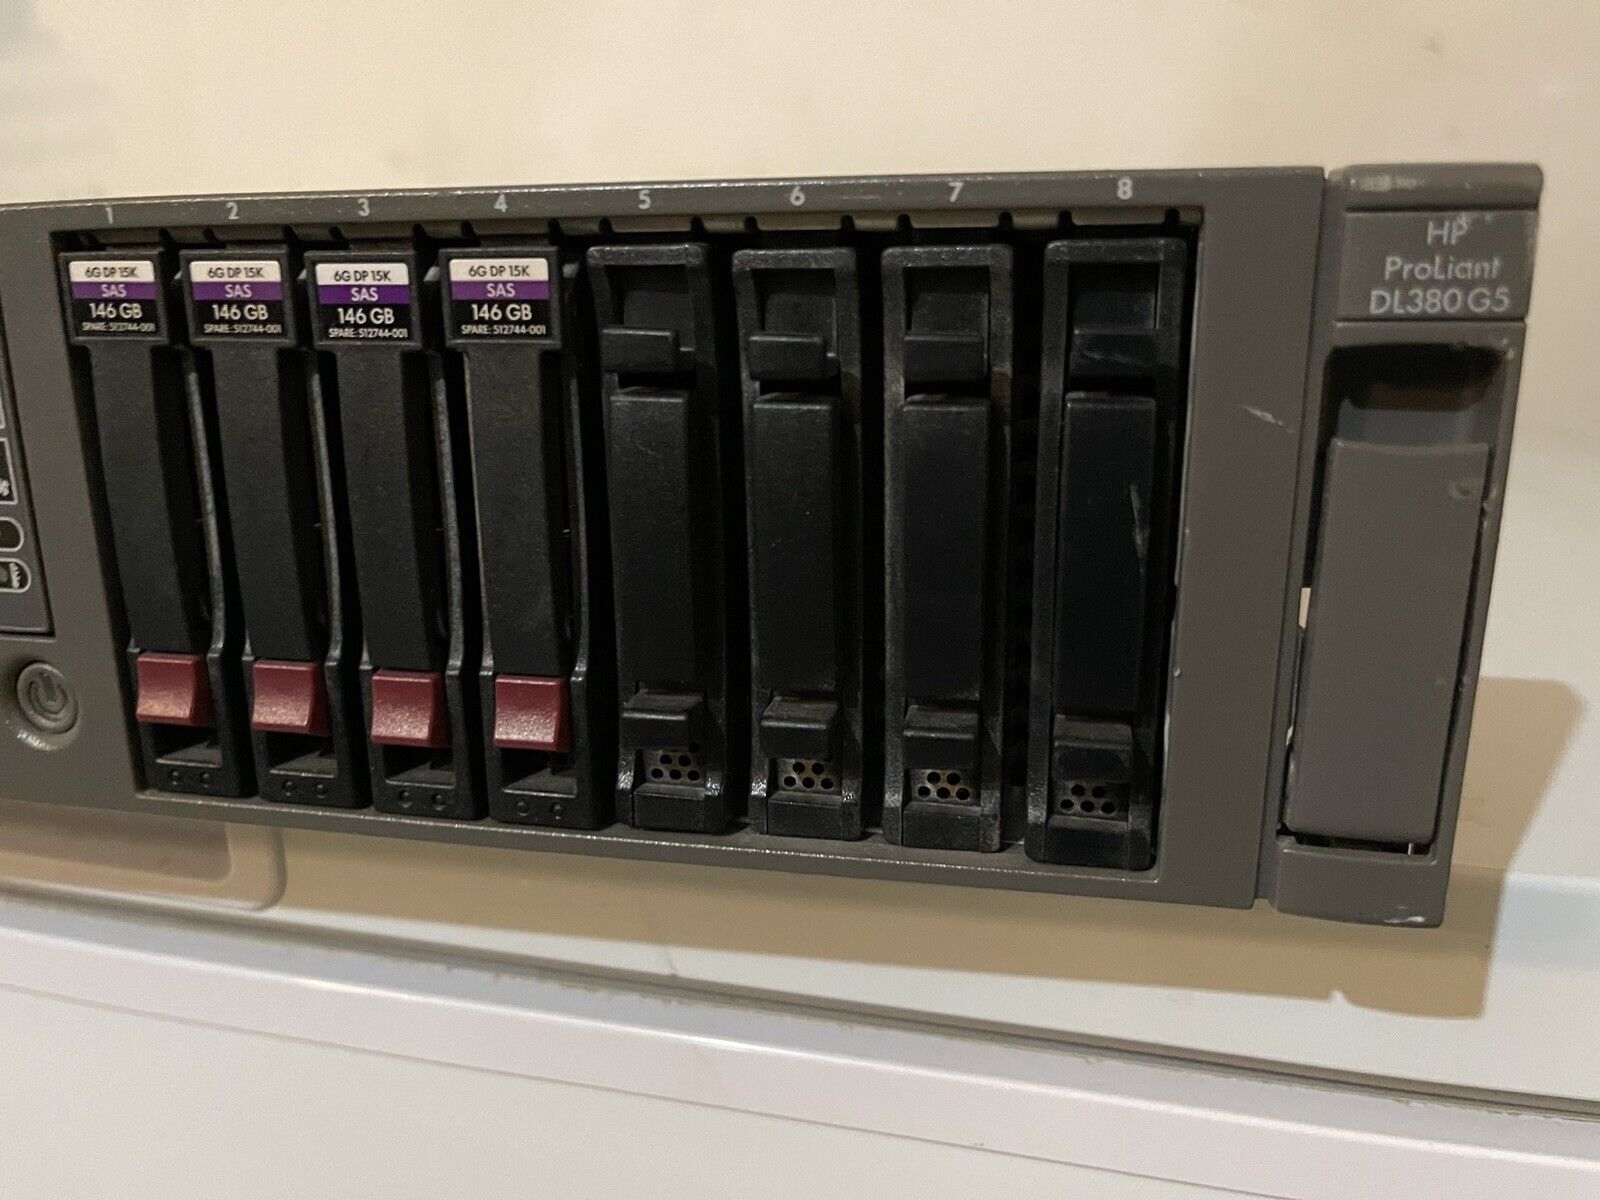 HP ProLiant DL380 G5 Server 8 Hard Drives – HP 146GB